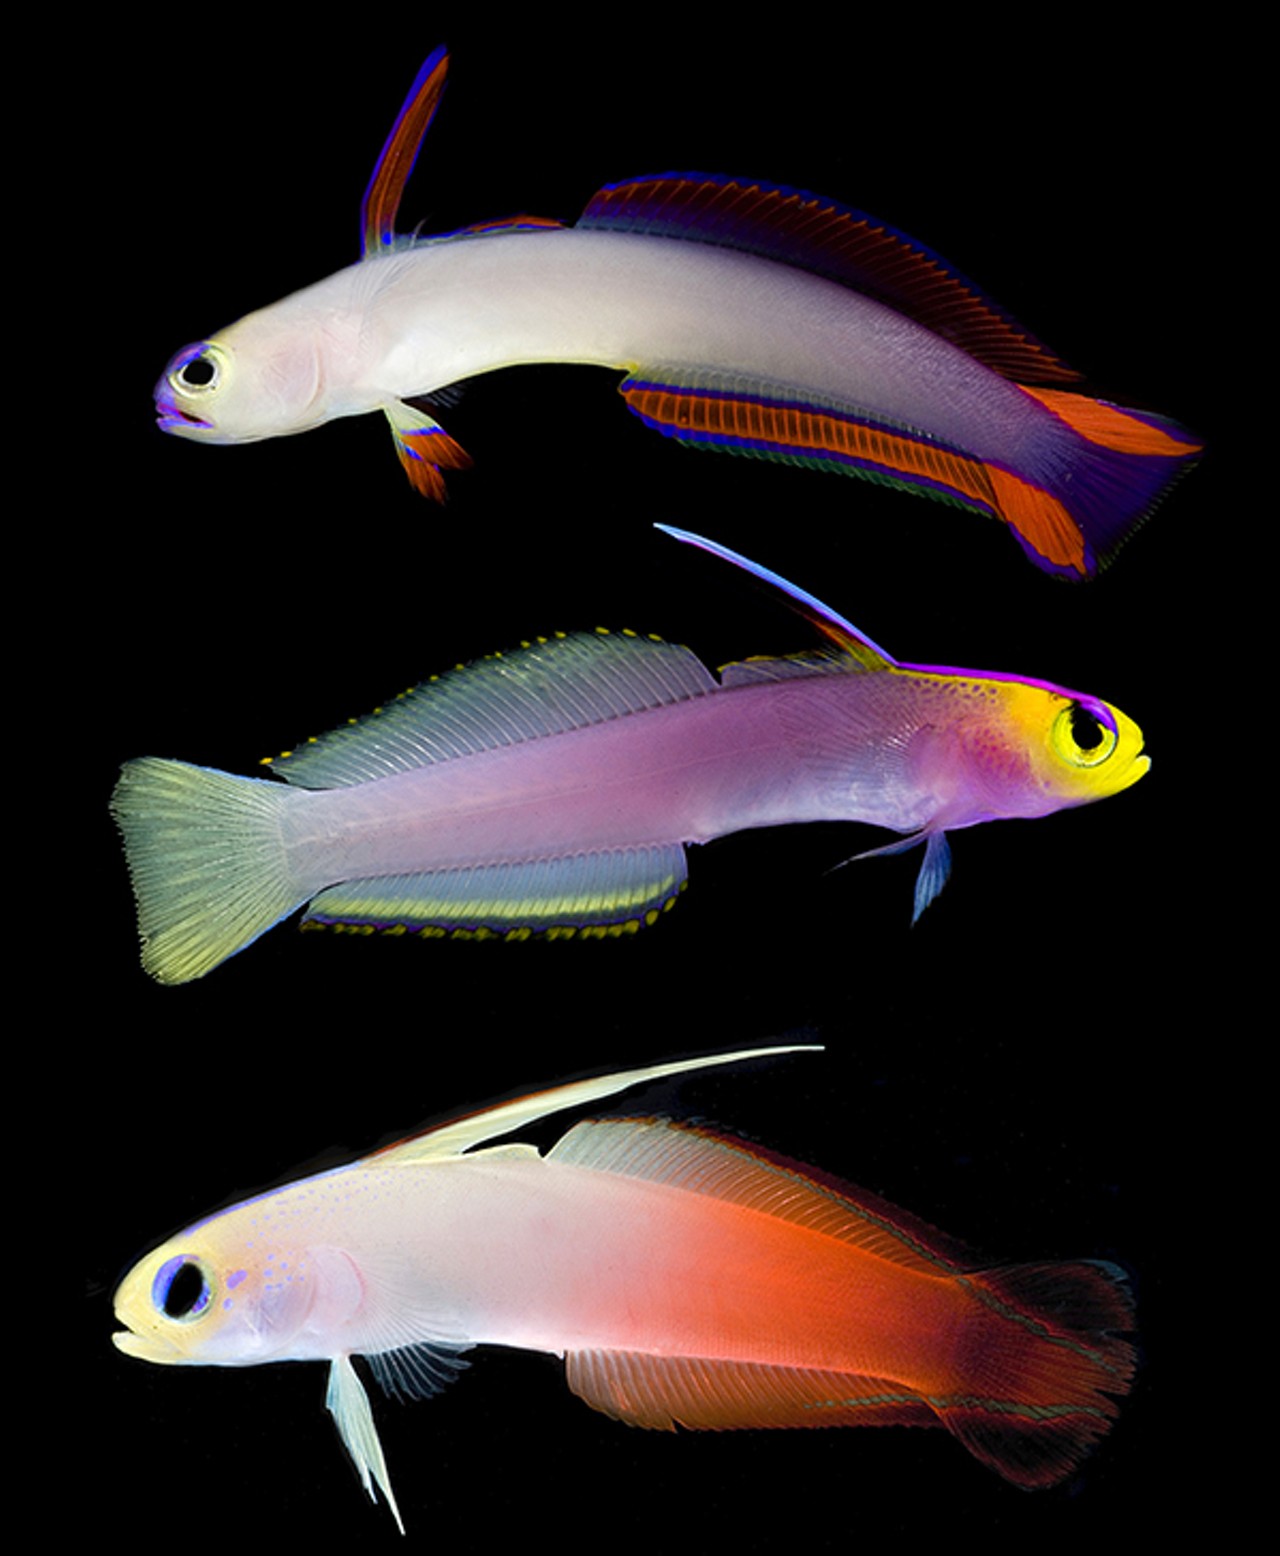 From top: Purple Firefish (Nemateleotris decora); Helfrichi's Firefish (Nemateleotris helfrichi); Firefish (Nemateleotris magnifica)